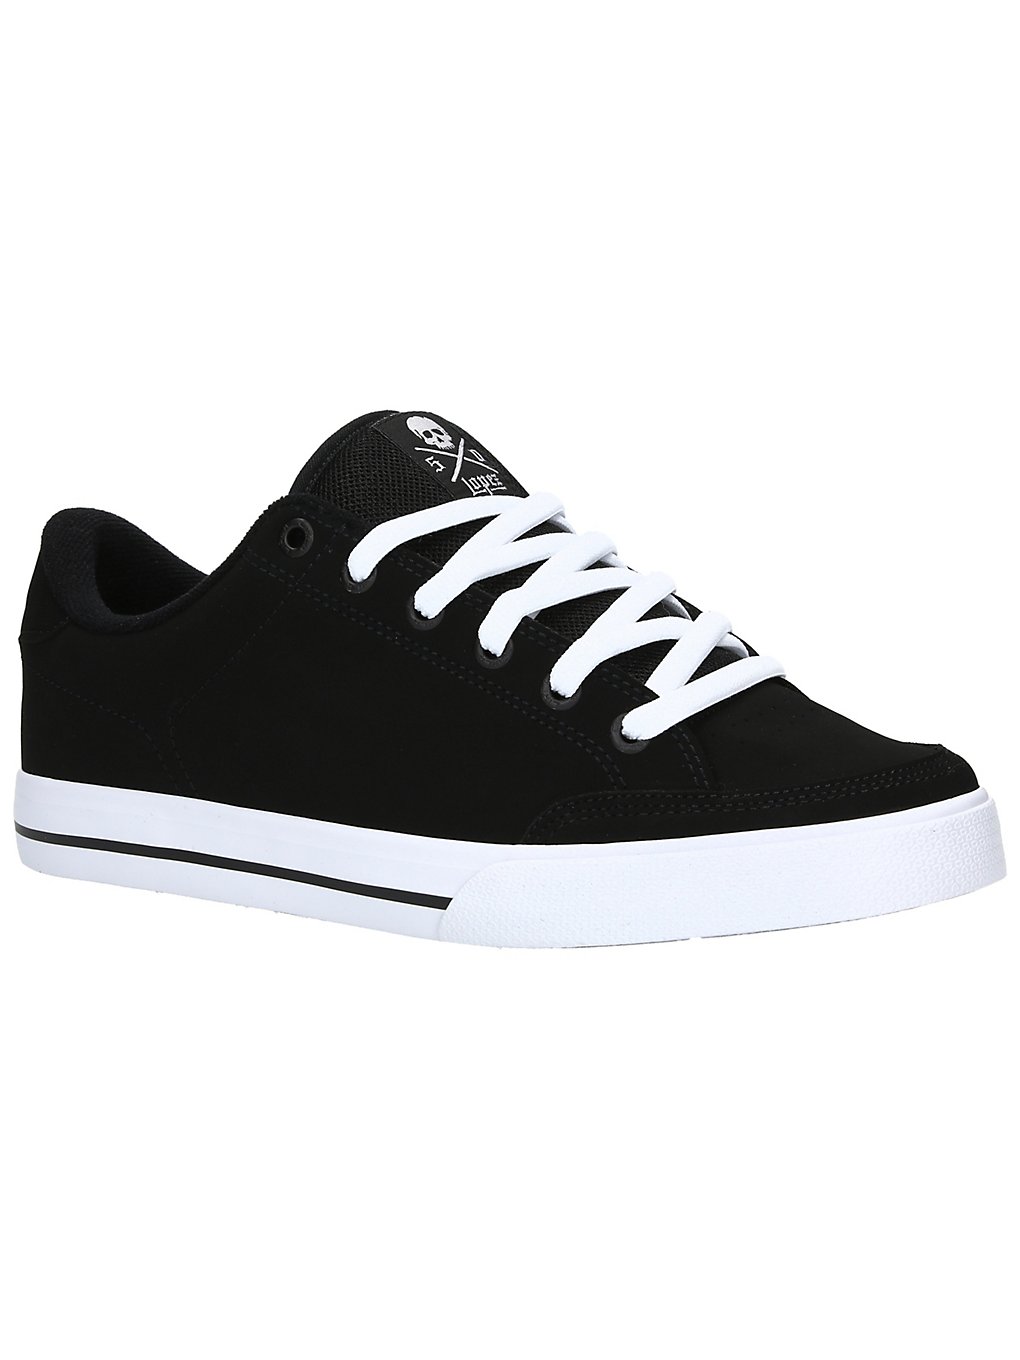 Circa AL 50 Skate Shoes noir